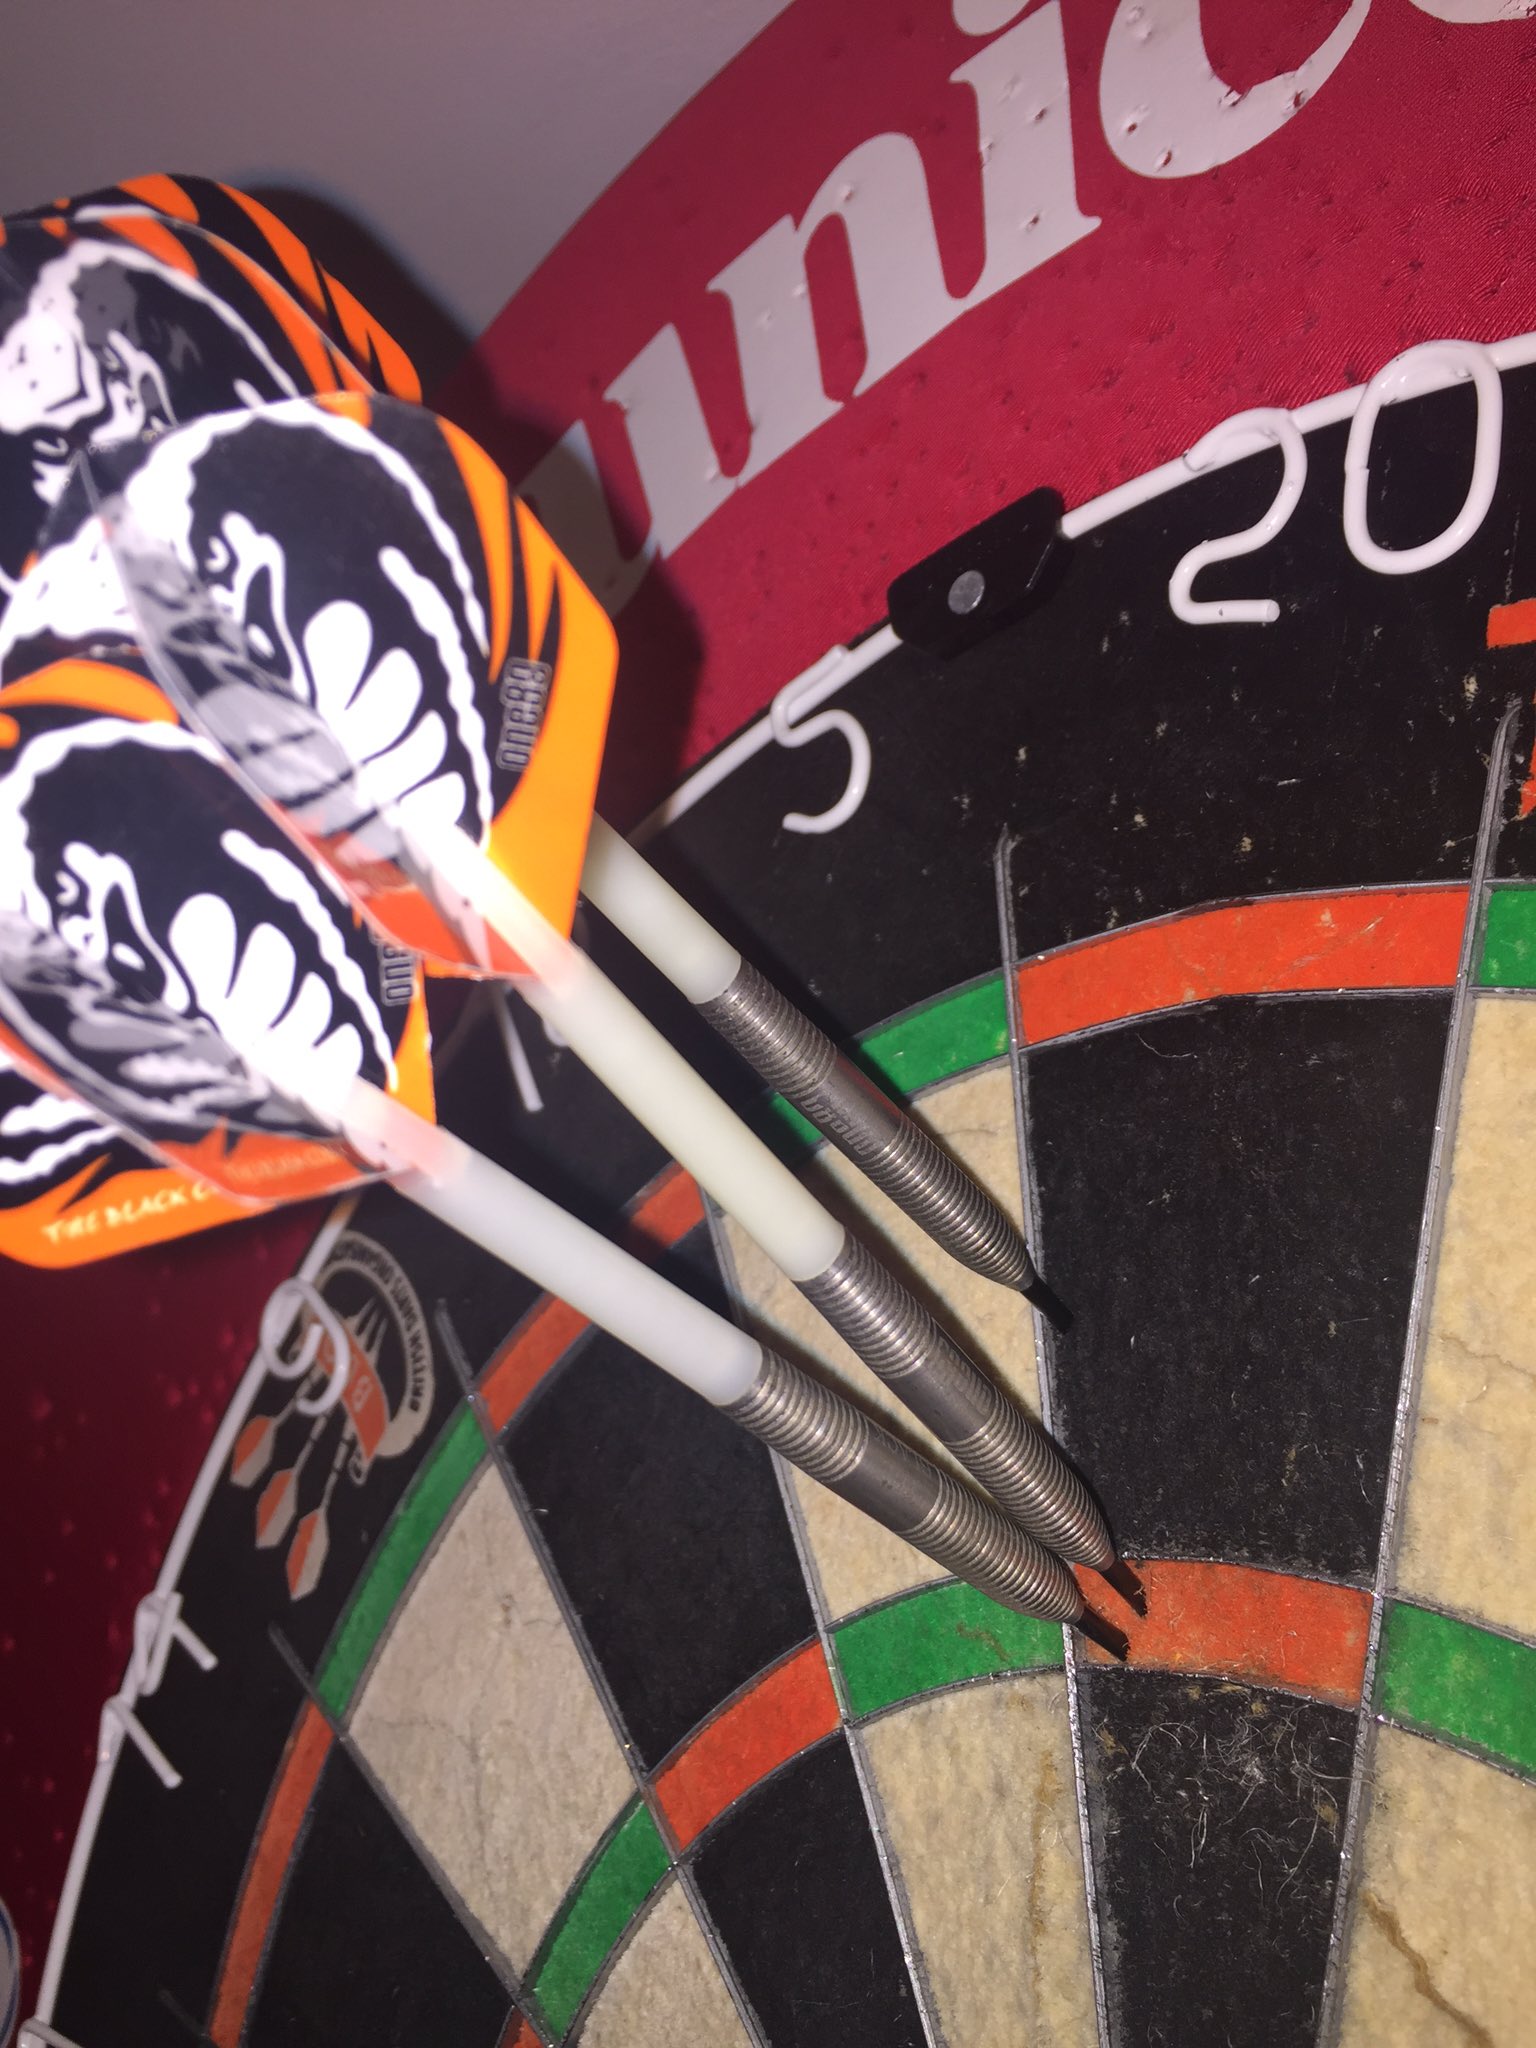 on Twitter: "@BlackCobra180 finally got Jeffrey Zwaan darts 23g one80 Black Cobra https://t.co/U4VaYDmCXO" / Twitter